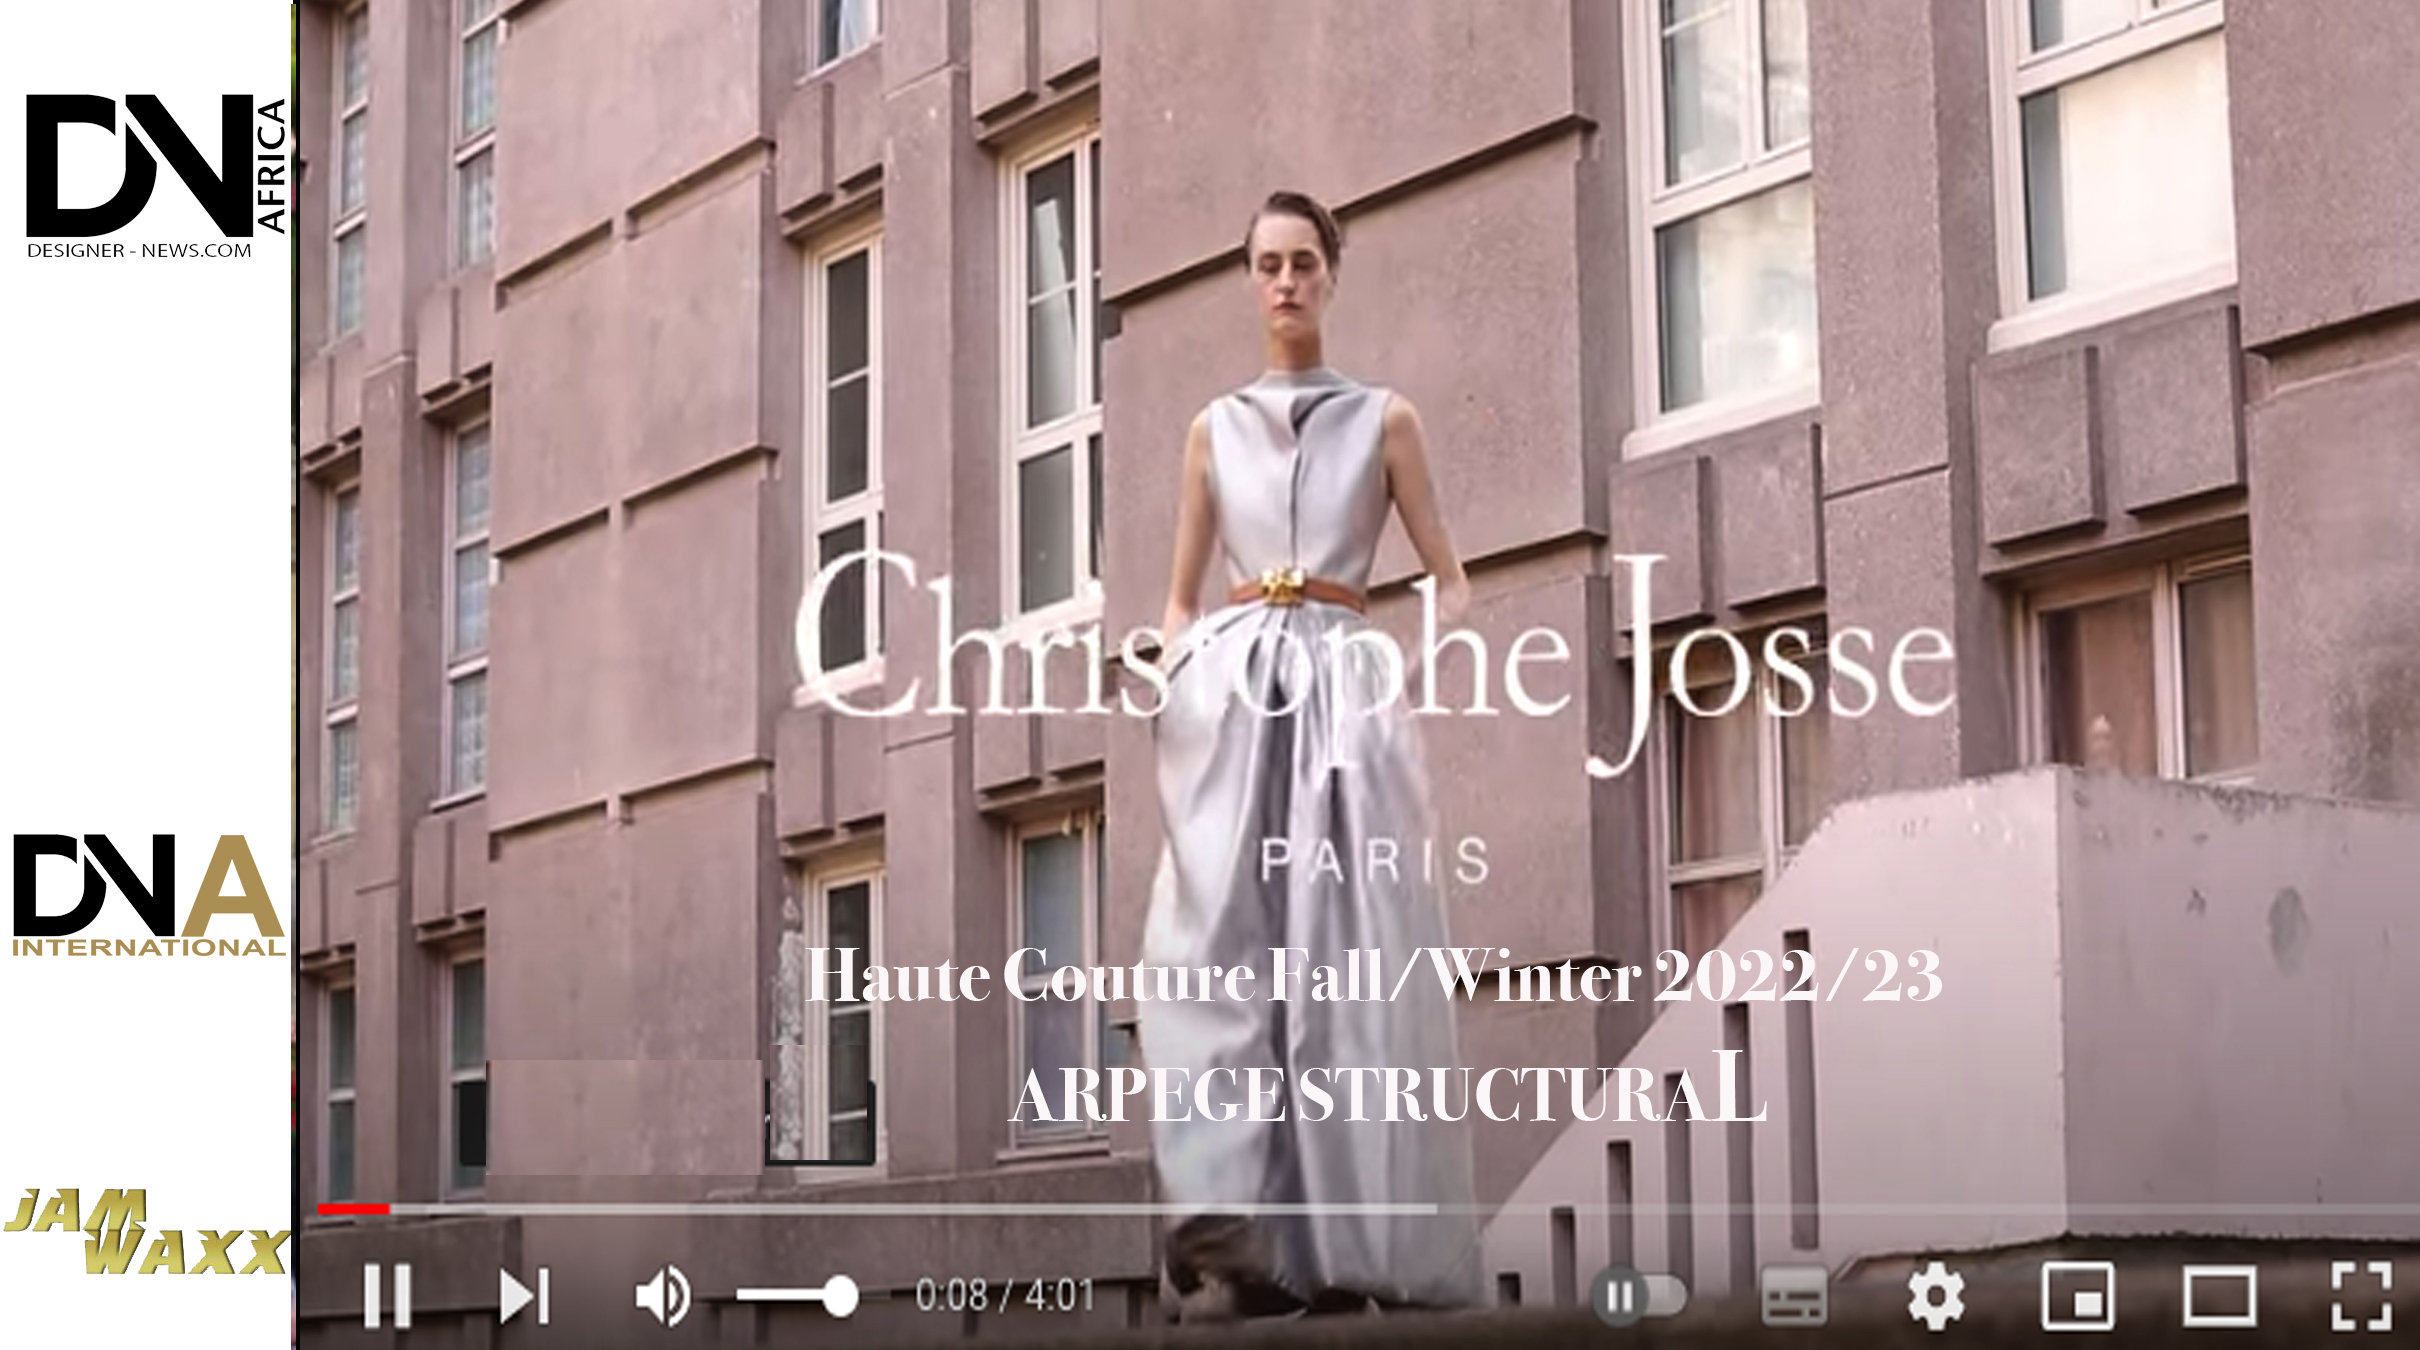 PARIS-FW-Christophe-Josse-Haute-Couture-FallWinter-2022-23- ARPEGE-STRUCTURAL-DN-AFRICA-DN-A-INTERNATIONAL-Media-Partenaire- Cover As VOGUE